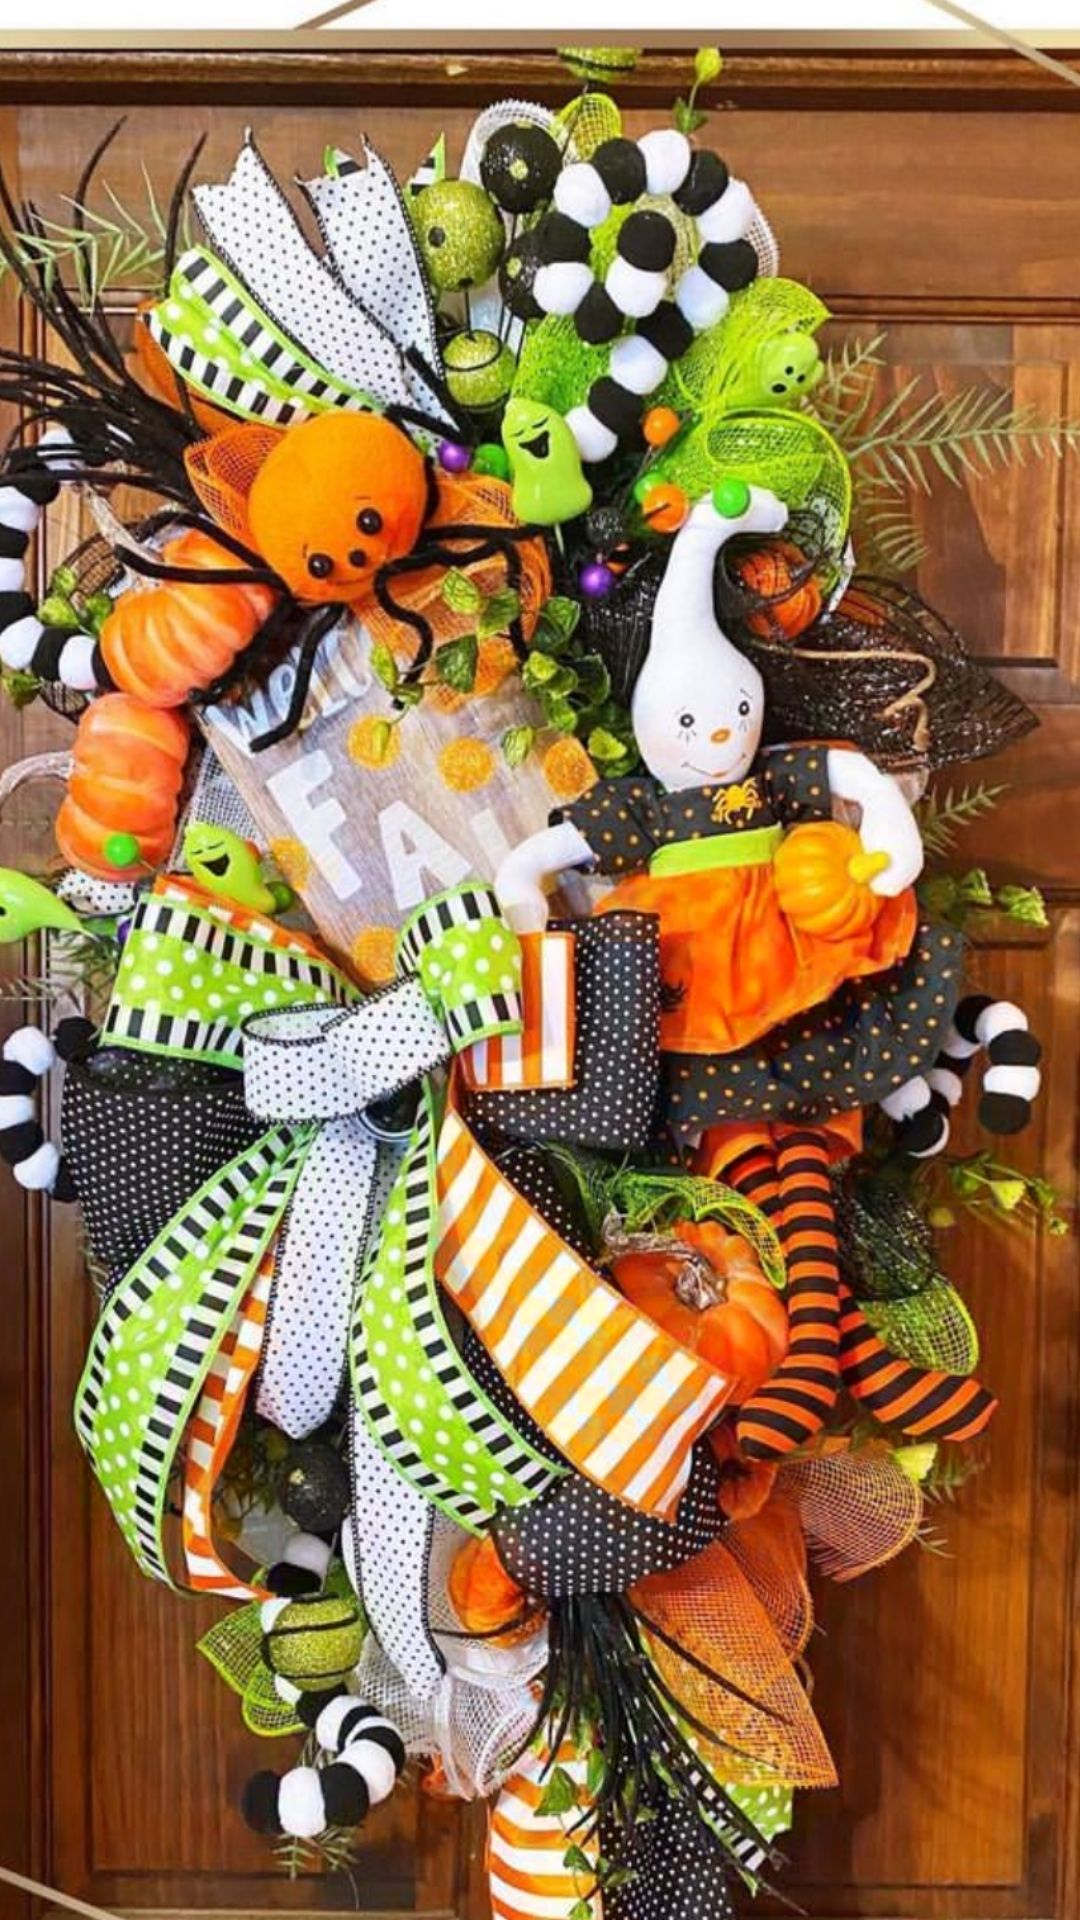 Spookly and creepy DIY Halloween wreath ideas 2021